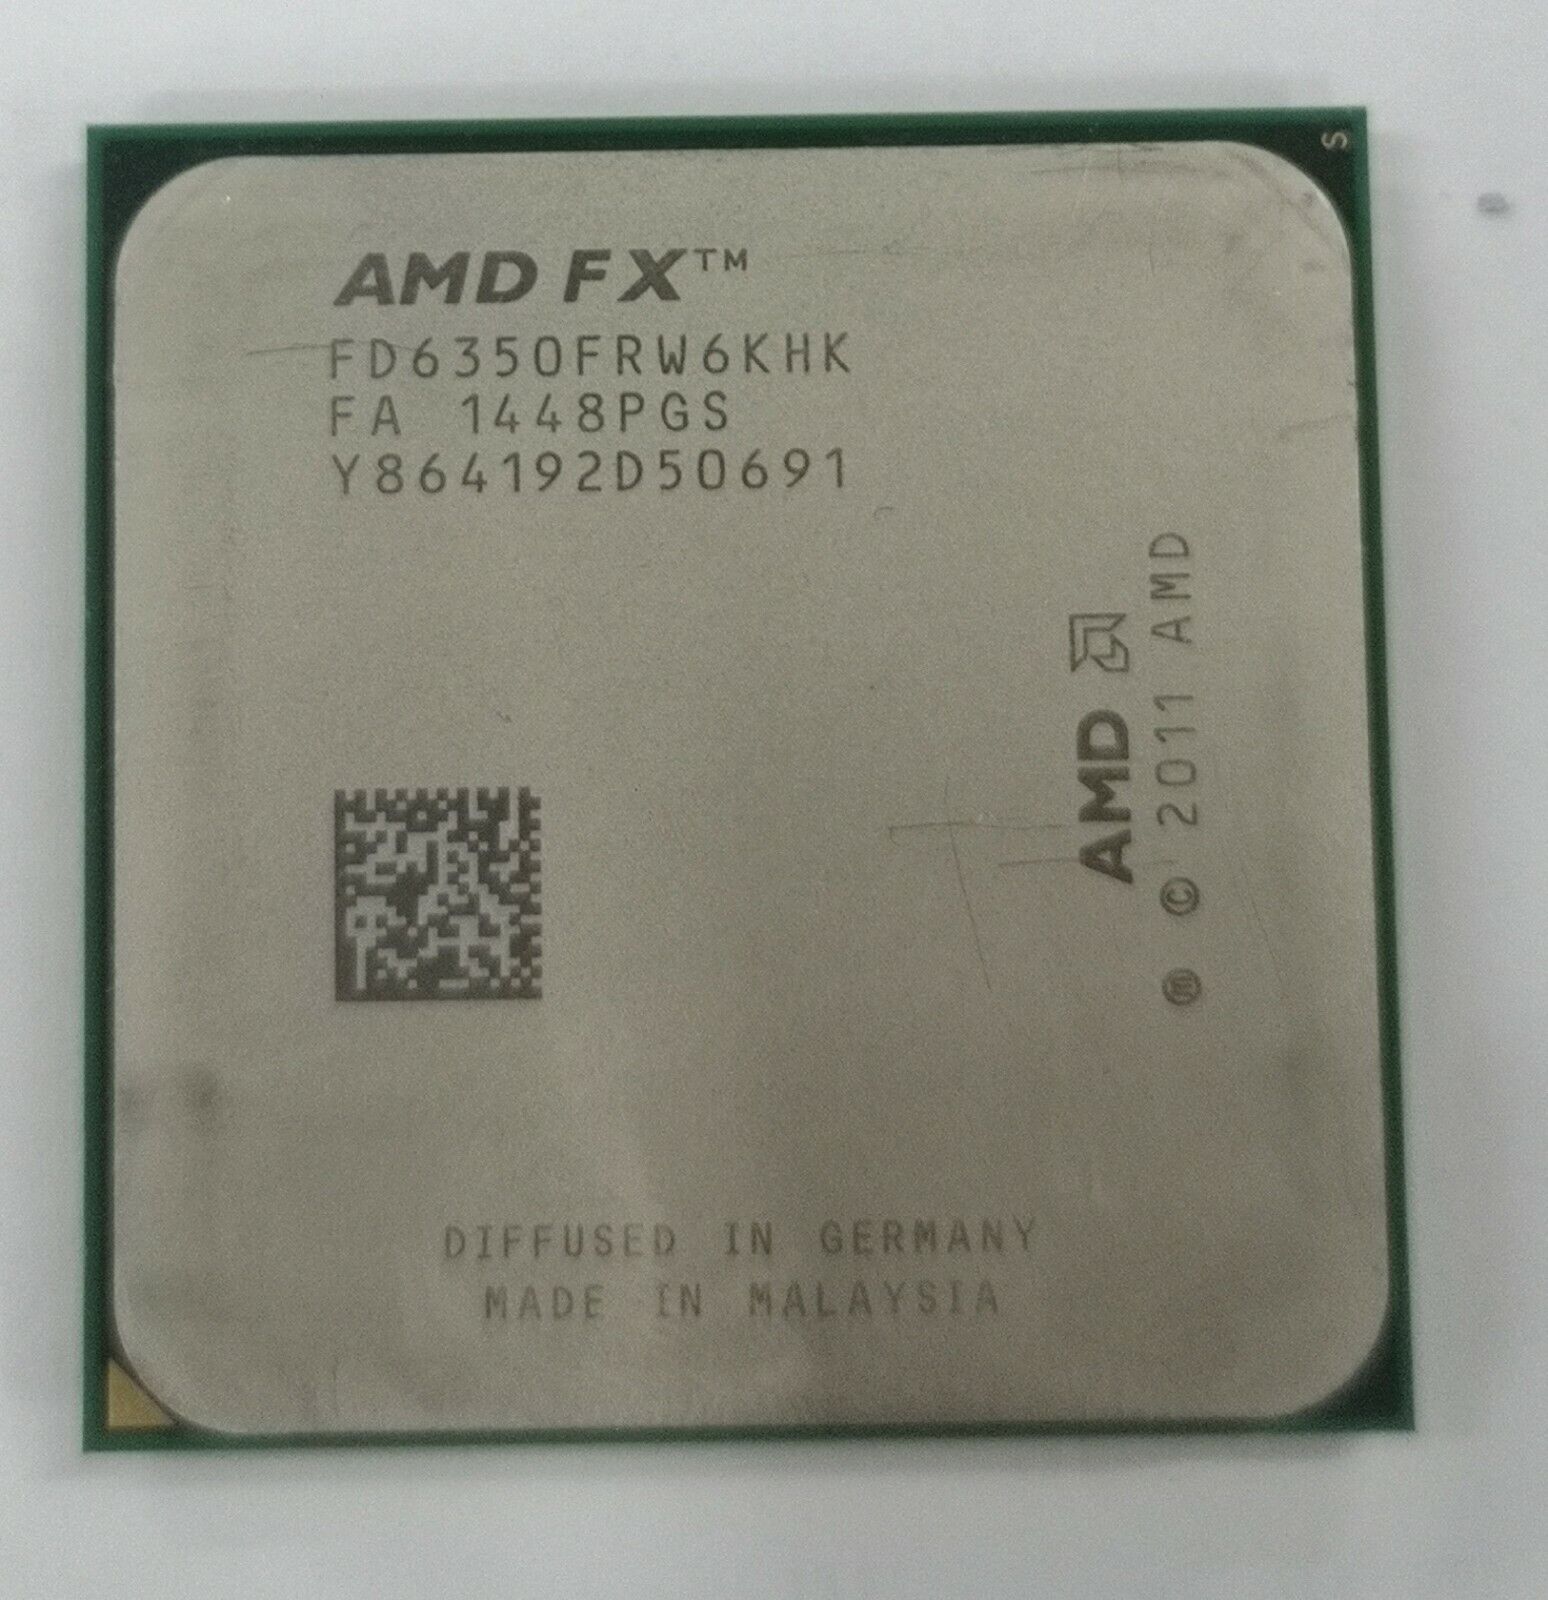 AMD FX-6350 Desktop Processor AM3+ fx6350 FD6350FRW6KHK 125W Six-core 125W TDP